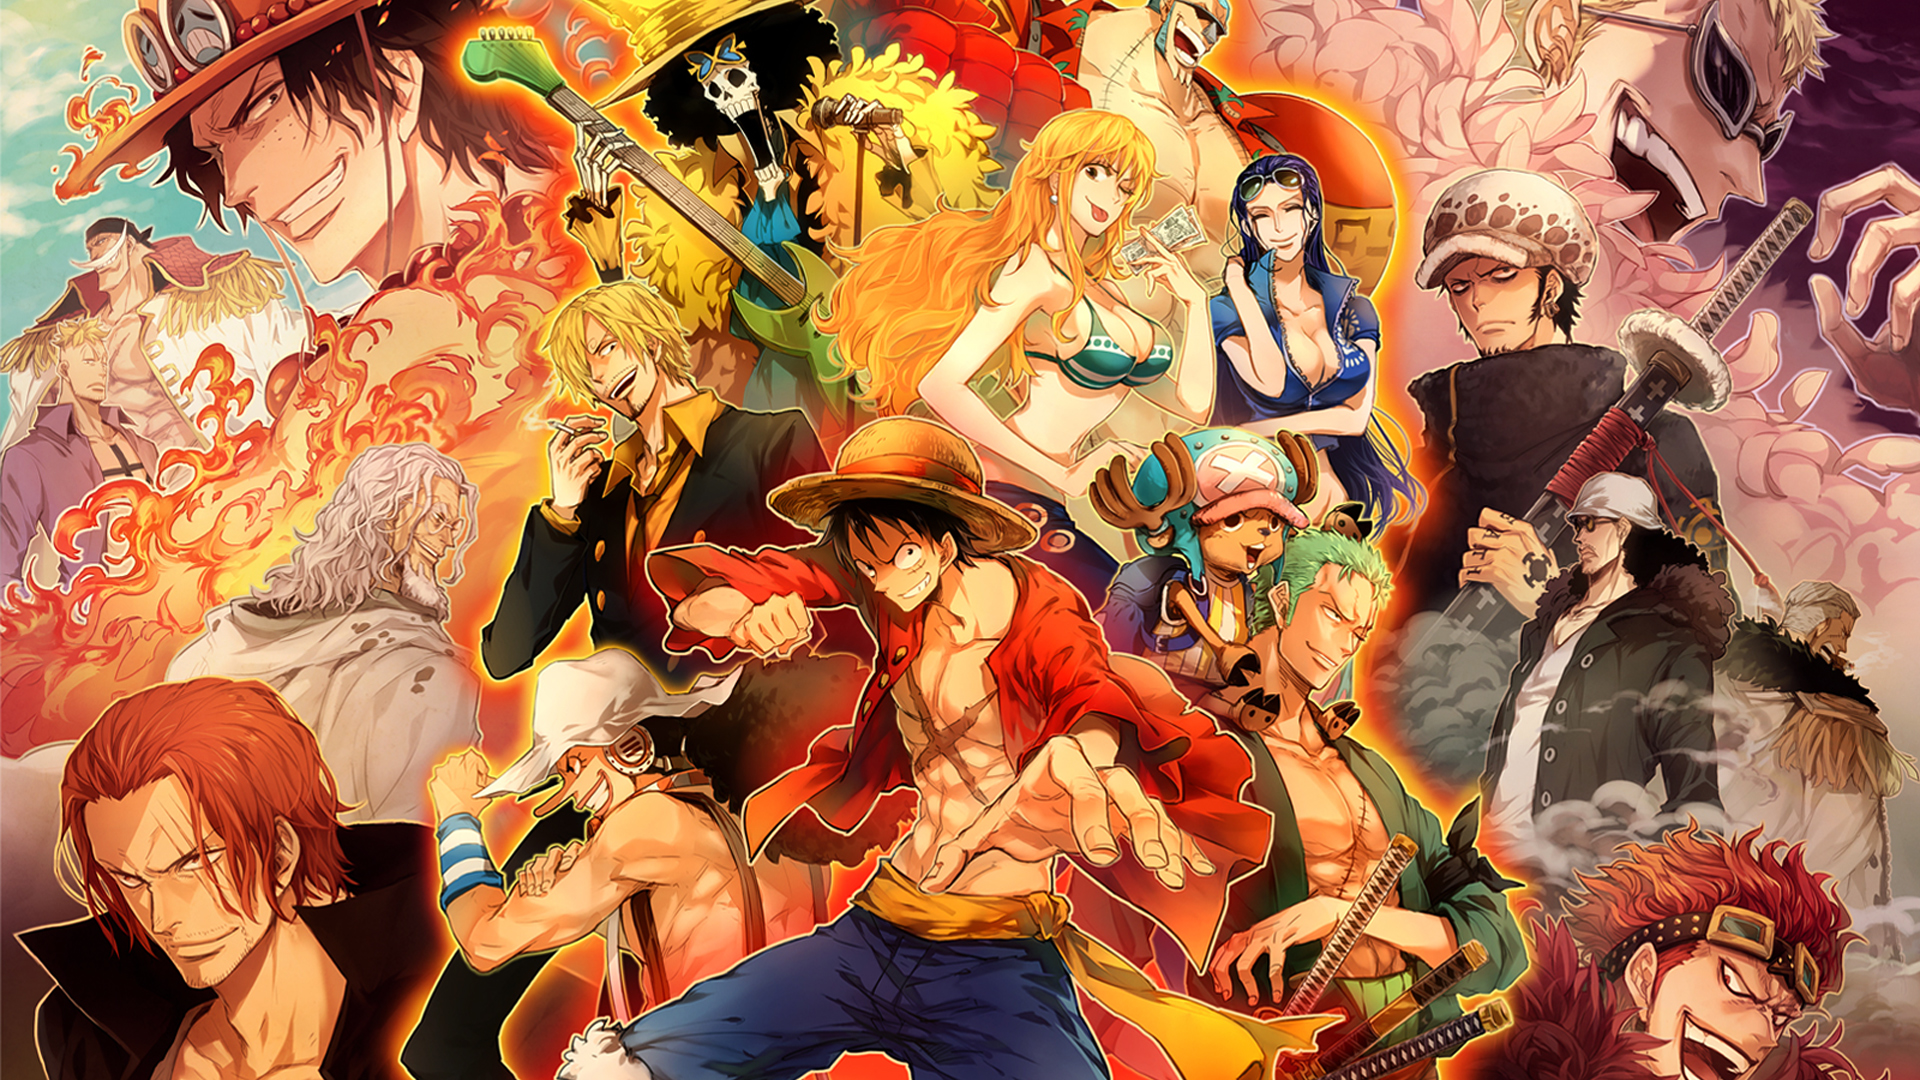 47 Anime Wallpaper One Piece On Wallpapersafari